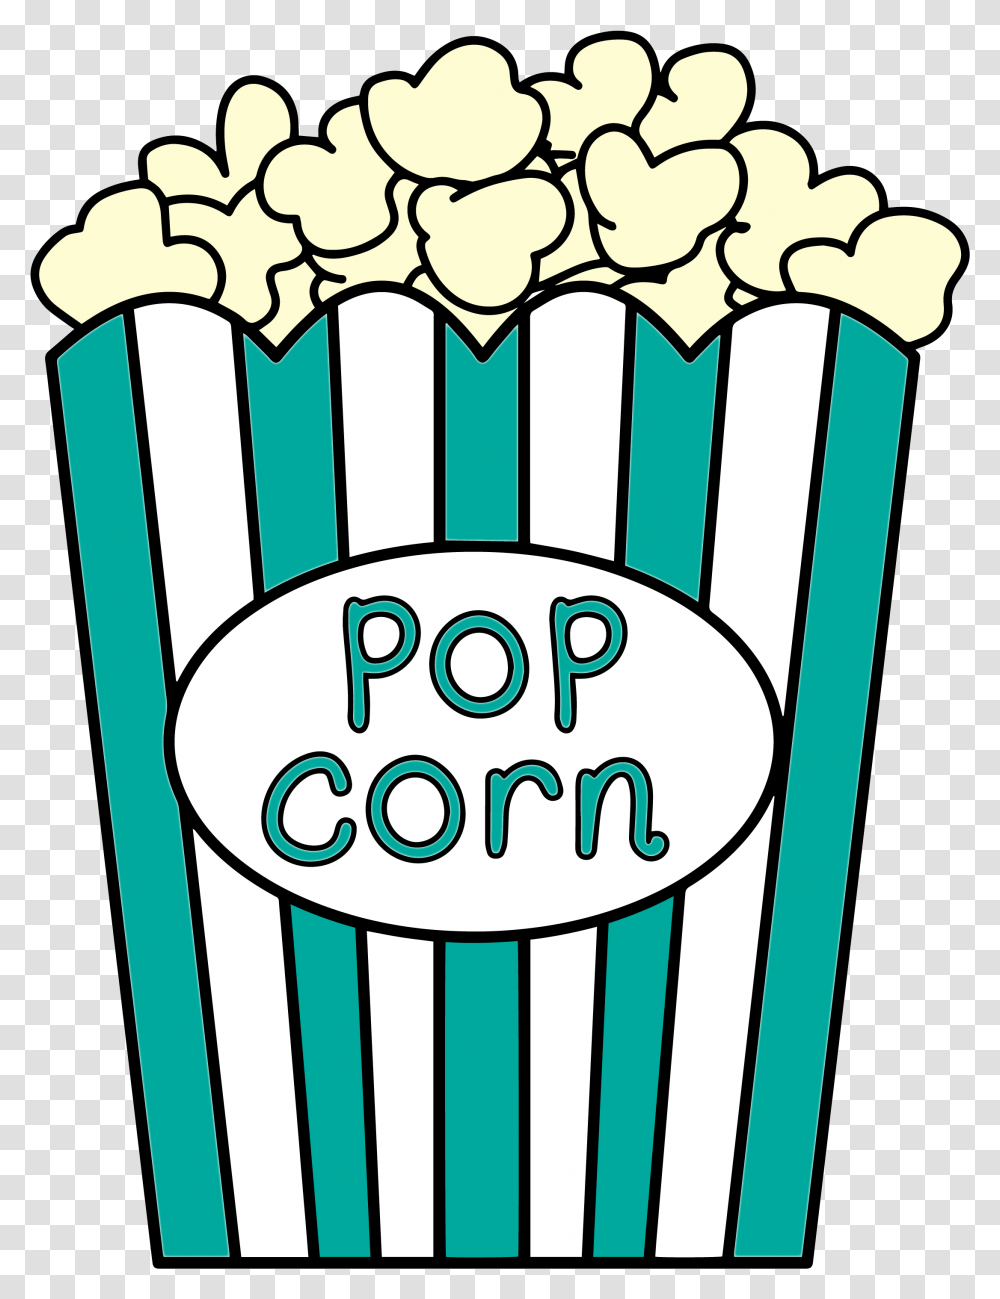 Popcorn Bag Clipart Imagenes De Cine, Food, Sweets, Confectionery, Snack Transparent Png